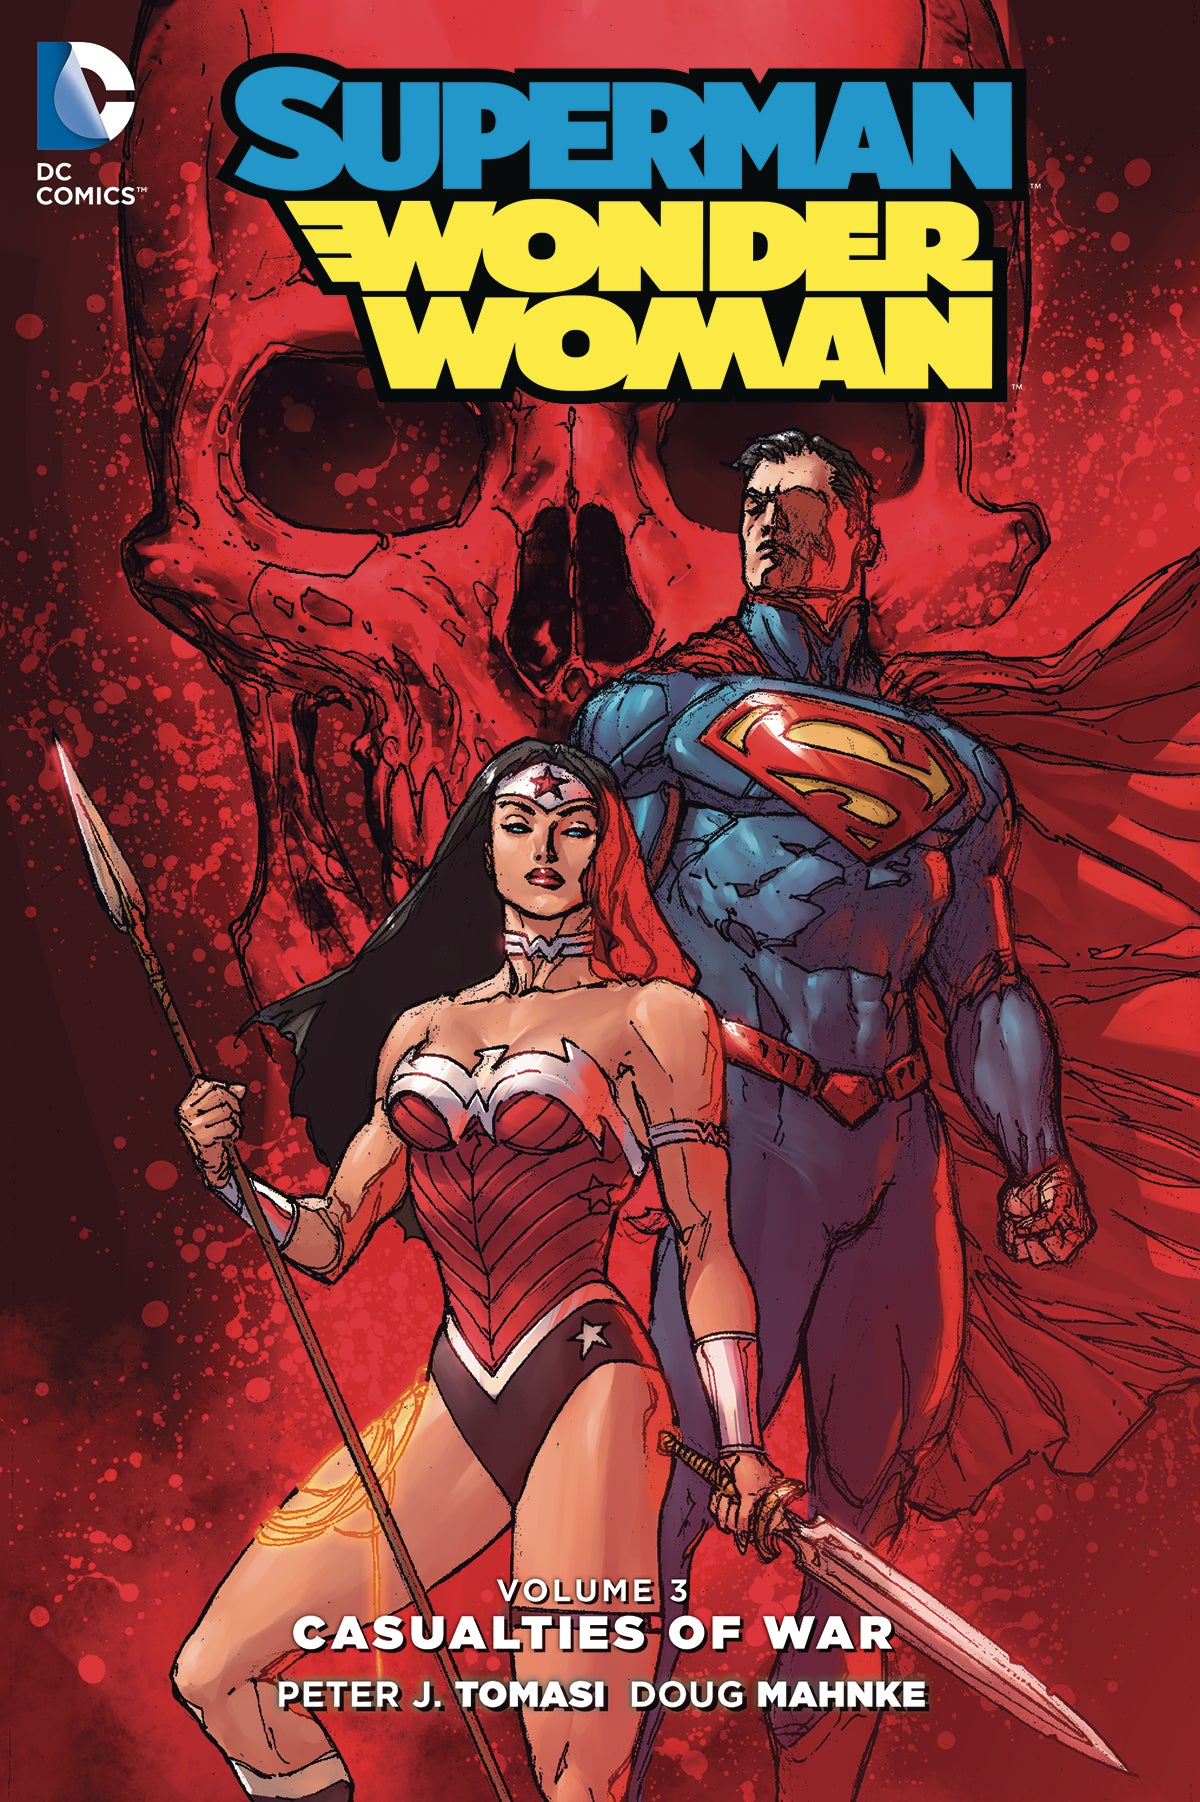 Superman/Wonder Woman Vol. 03 Casualties of War